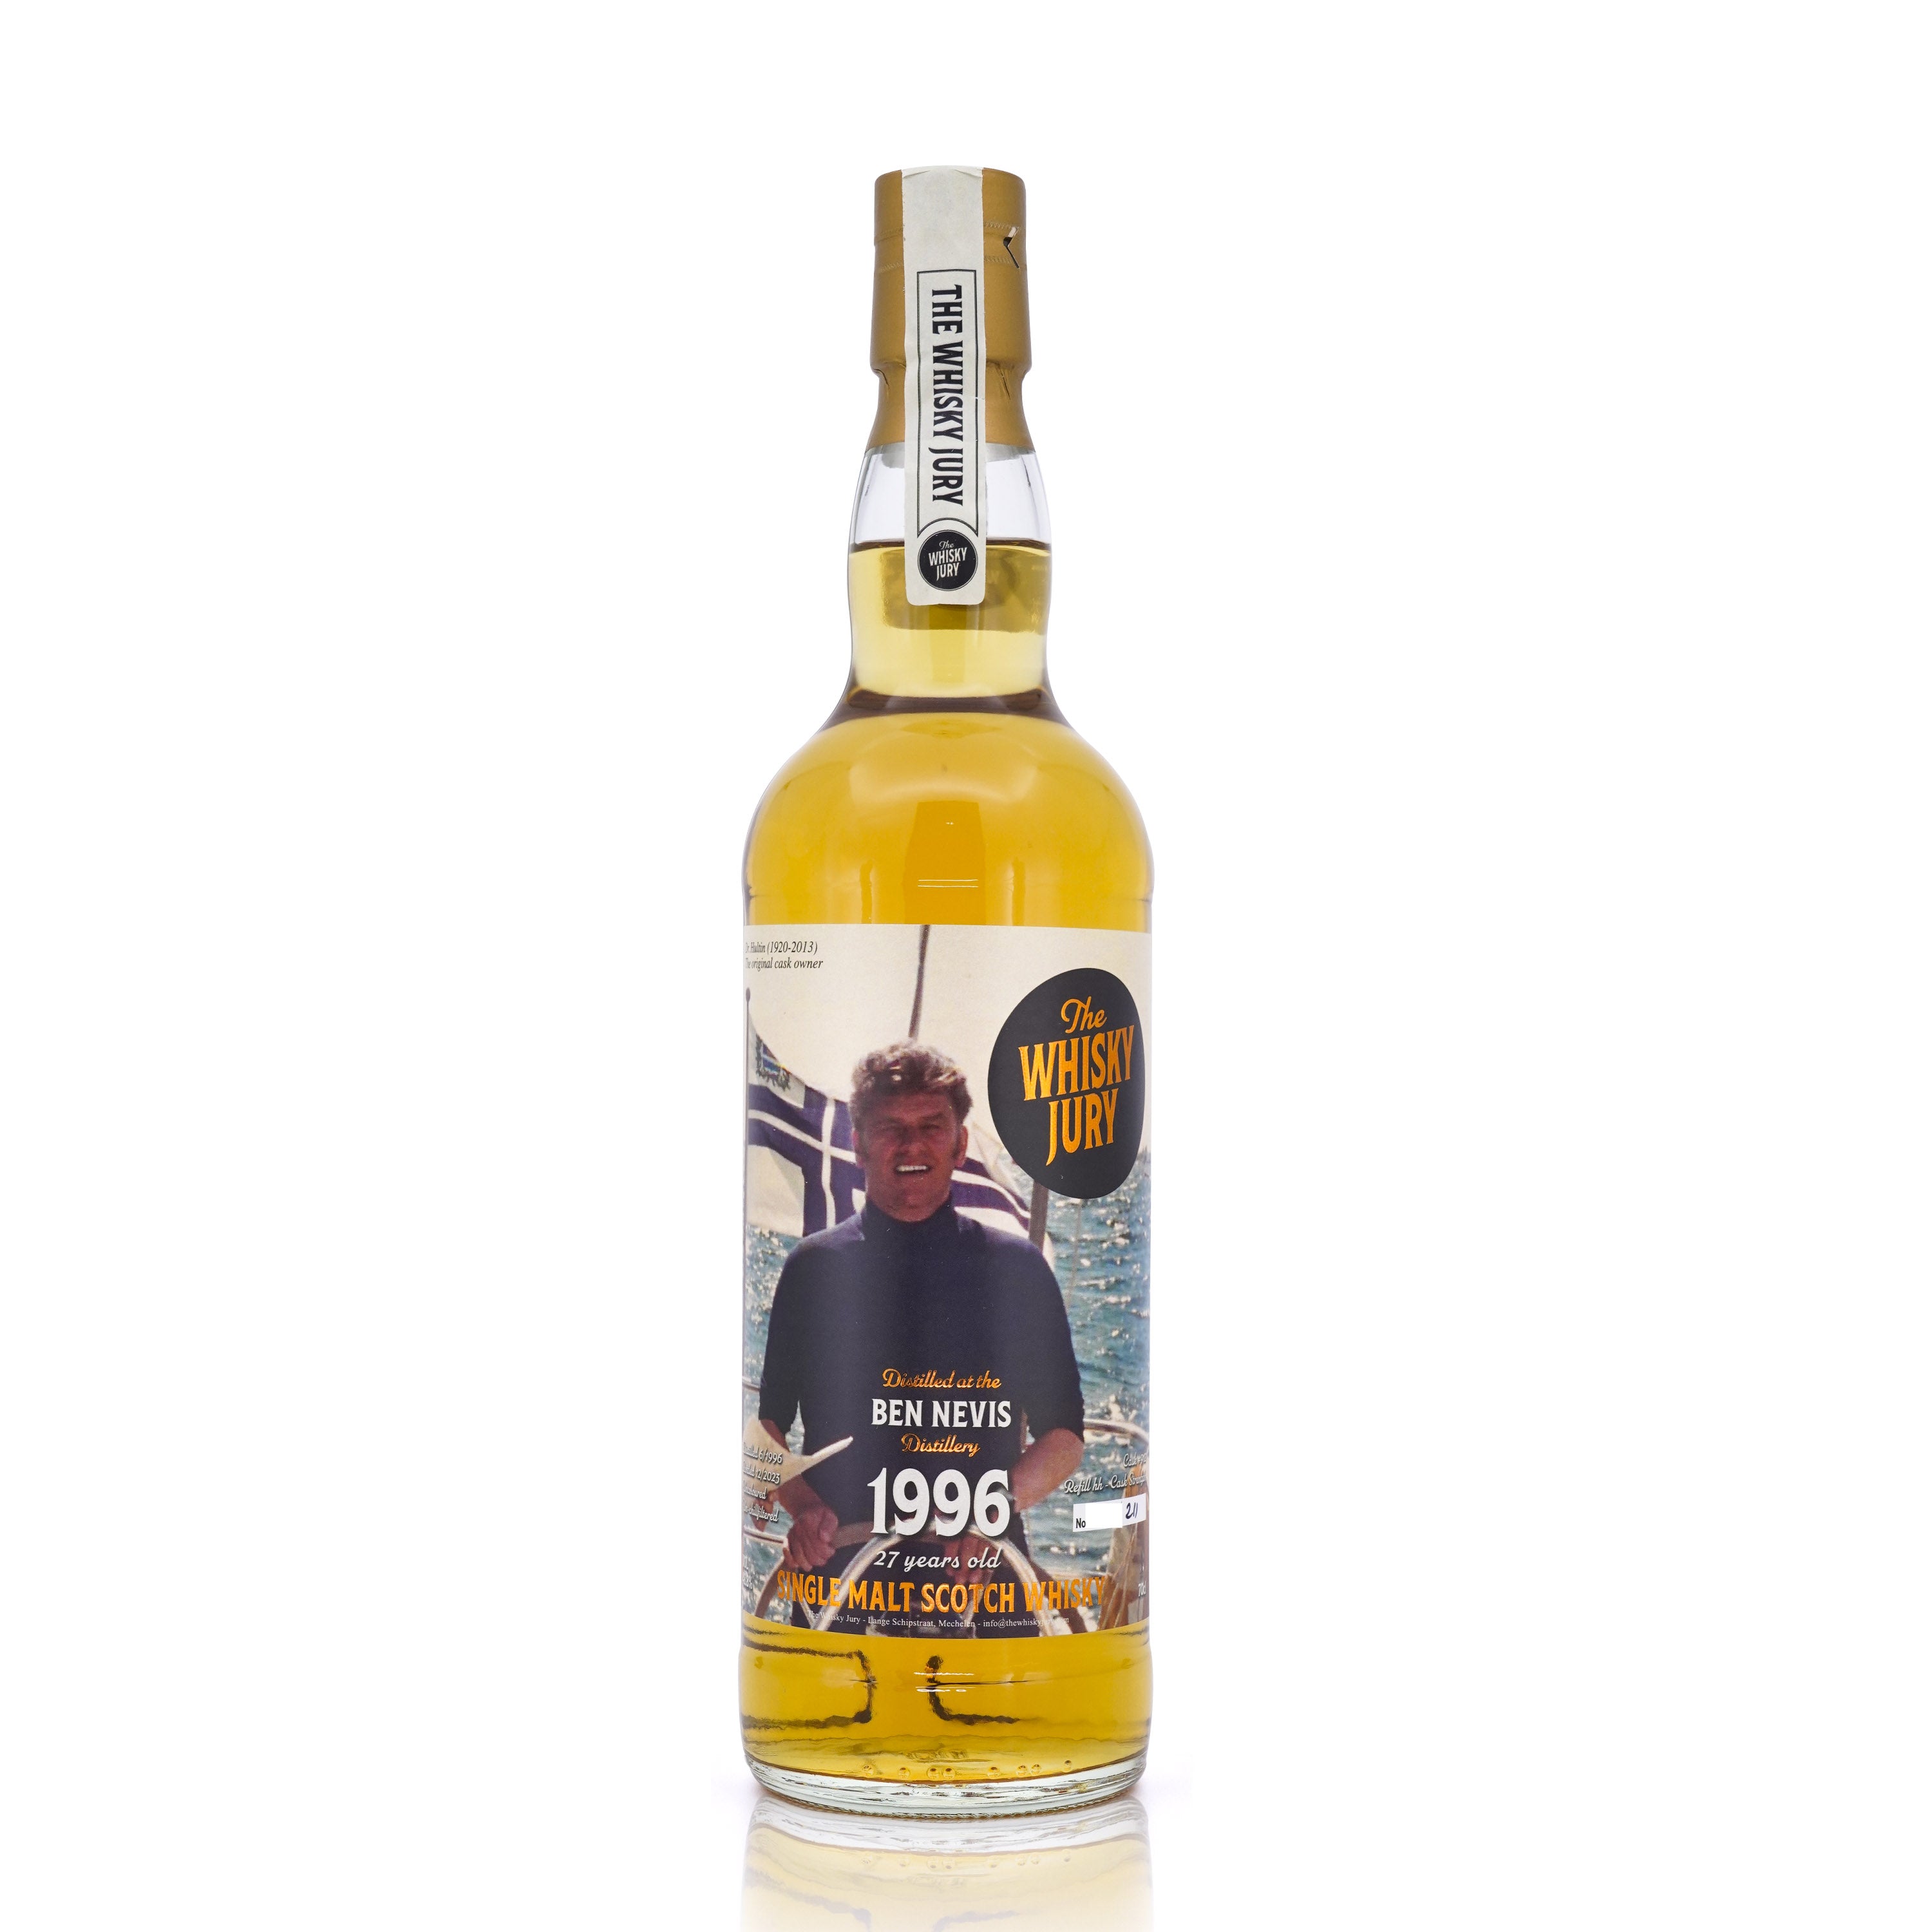 Ben Nevis 27 Years Old Refill Hogshead #912 The Whisky Jury 48.8% 700ml